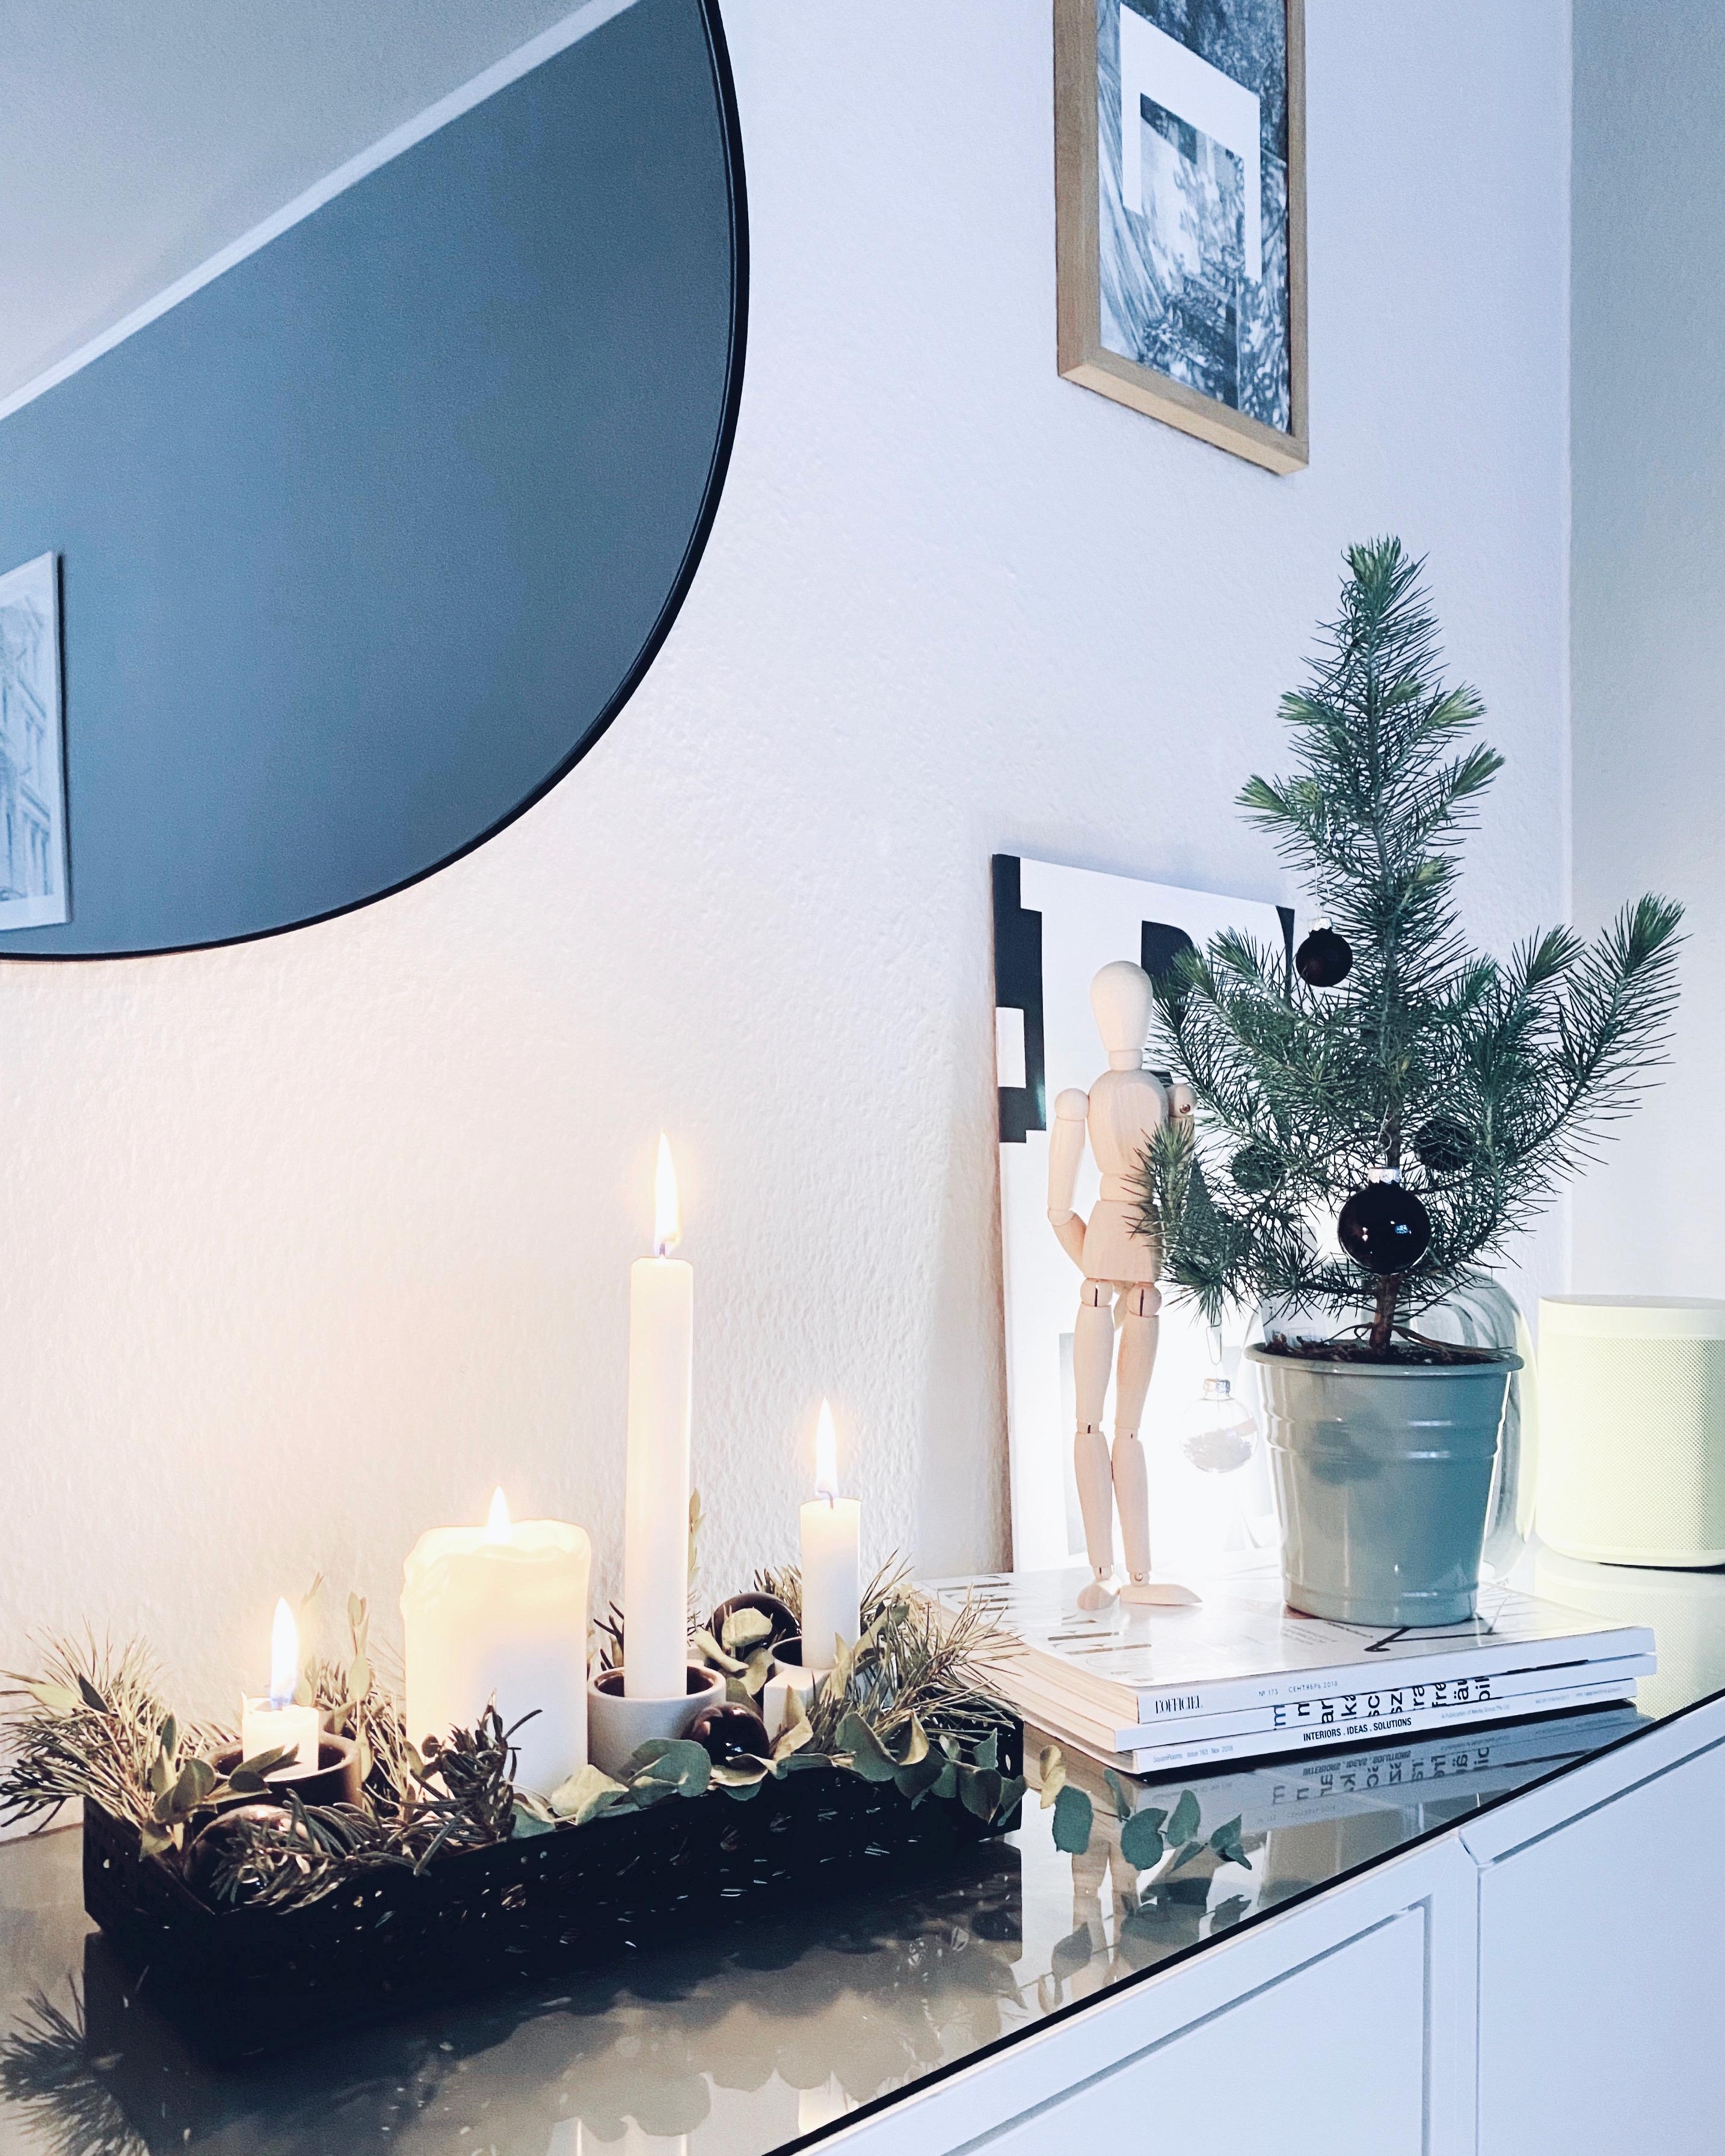 Einen wunderschönen 4.Advent! 🖤
#xmas #xmasdecorations #interior #nordichome #hygge #xmasiscoming #scandinavianliving